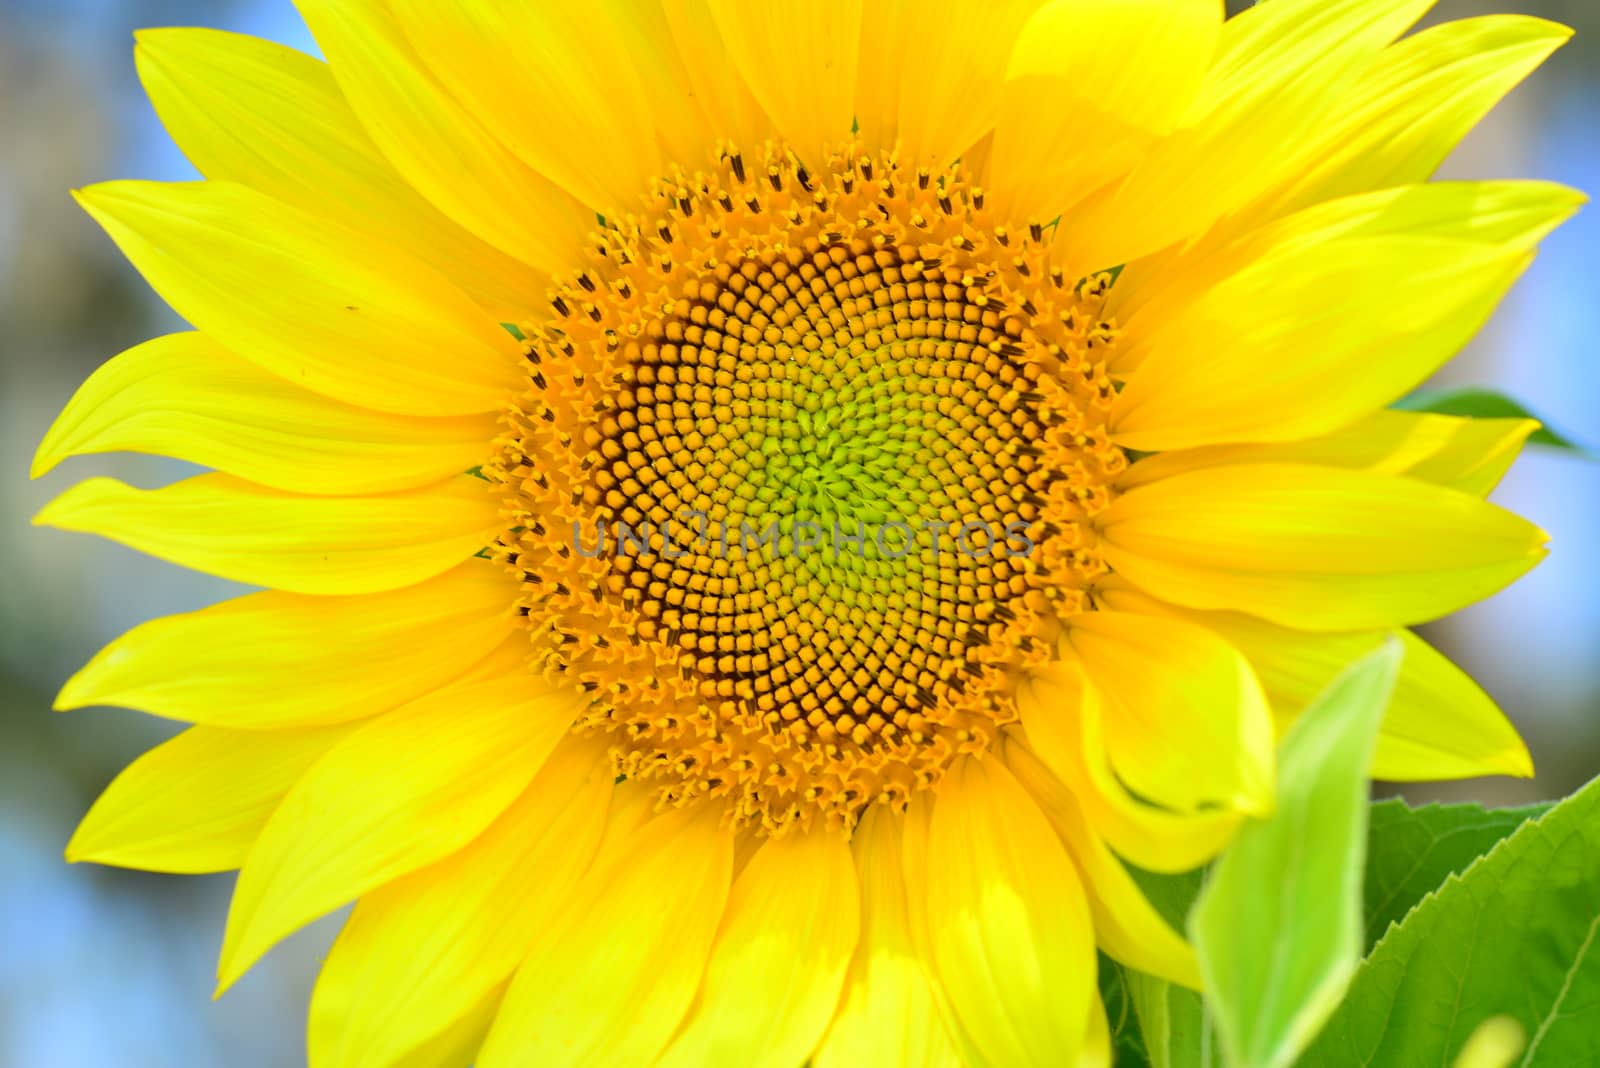 Sunflower flower by nikonite